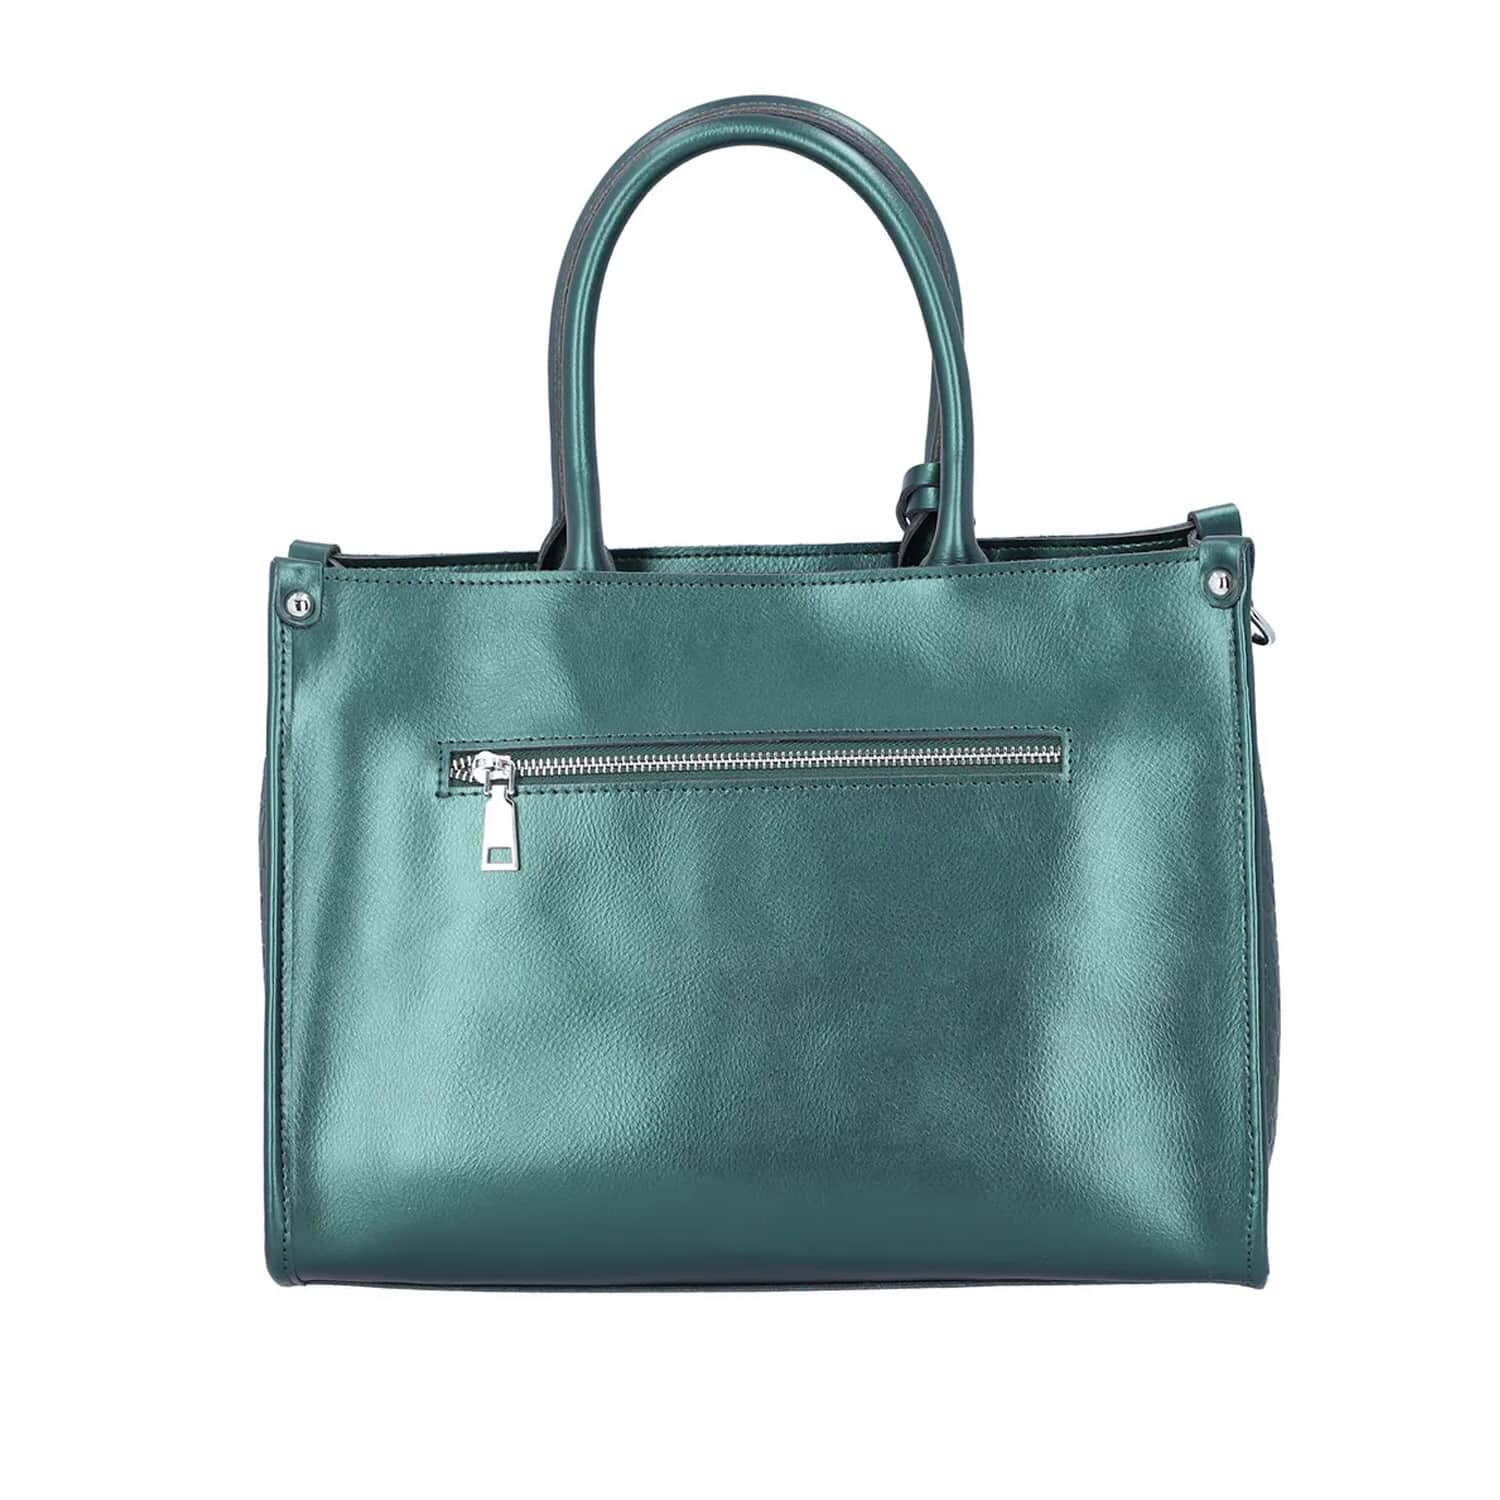 Green Crocodile Pattern Genuine Leather Convertible Bag with Detachable  Shoulder Strap, Leather Handbag, Crossbody Bag, Purse, Leather Bag for Women